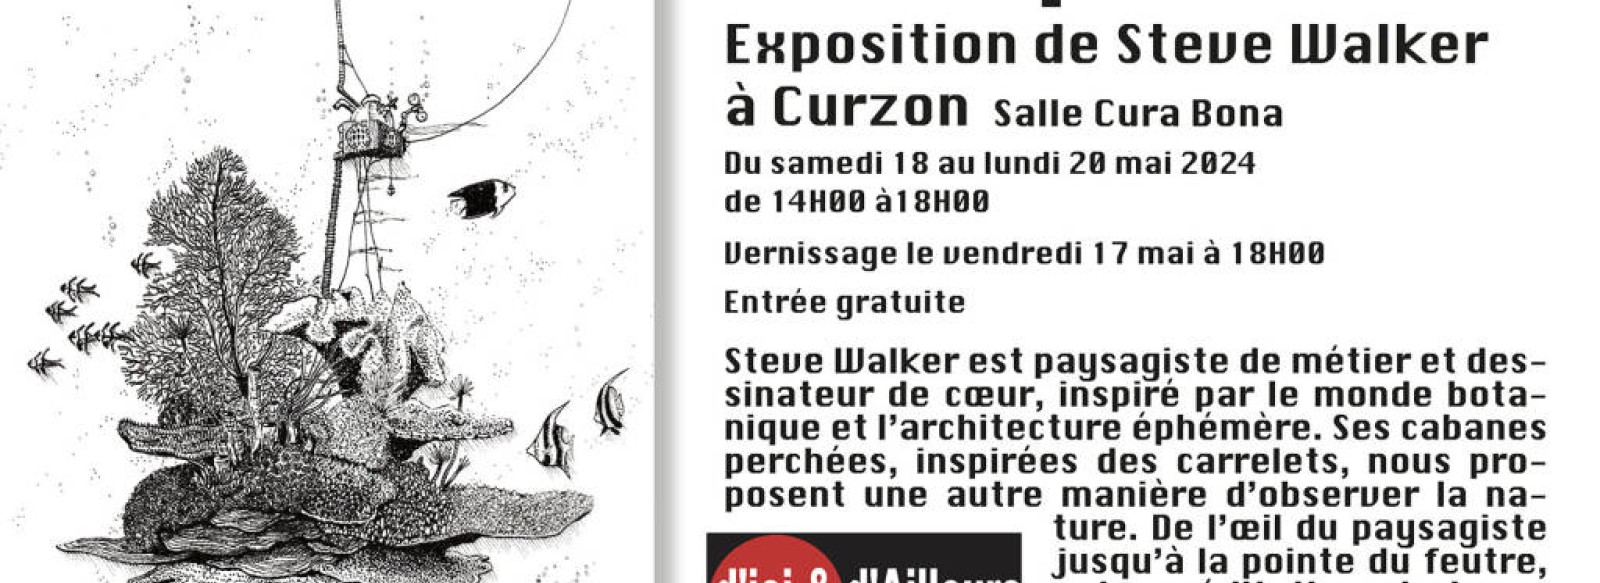 EXPOSITION DE STEVE WALKER